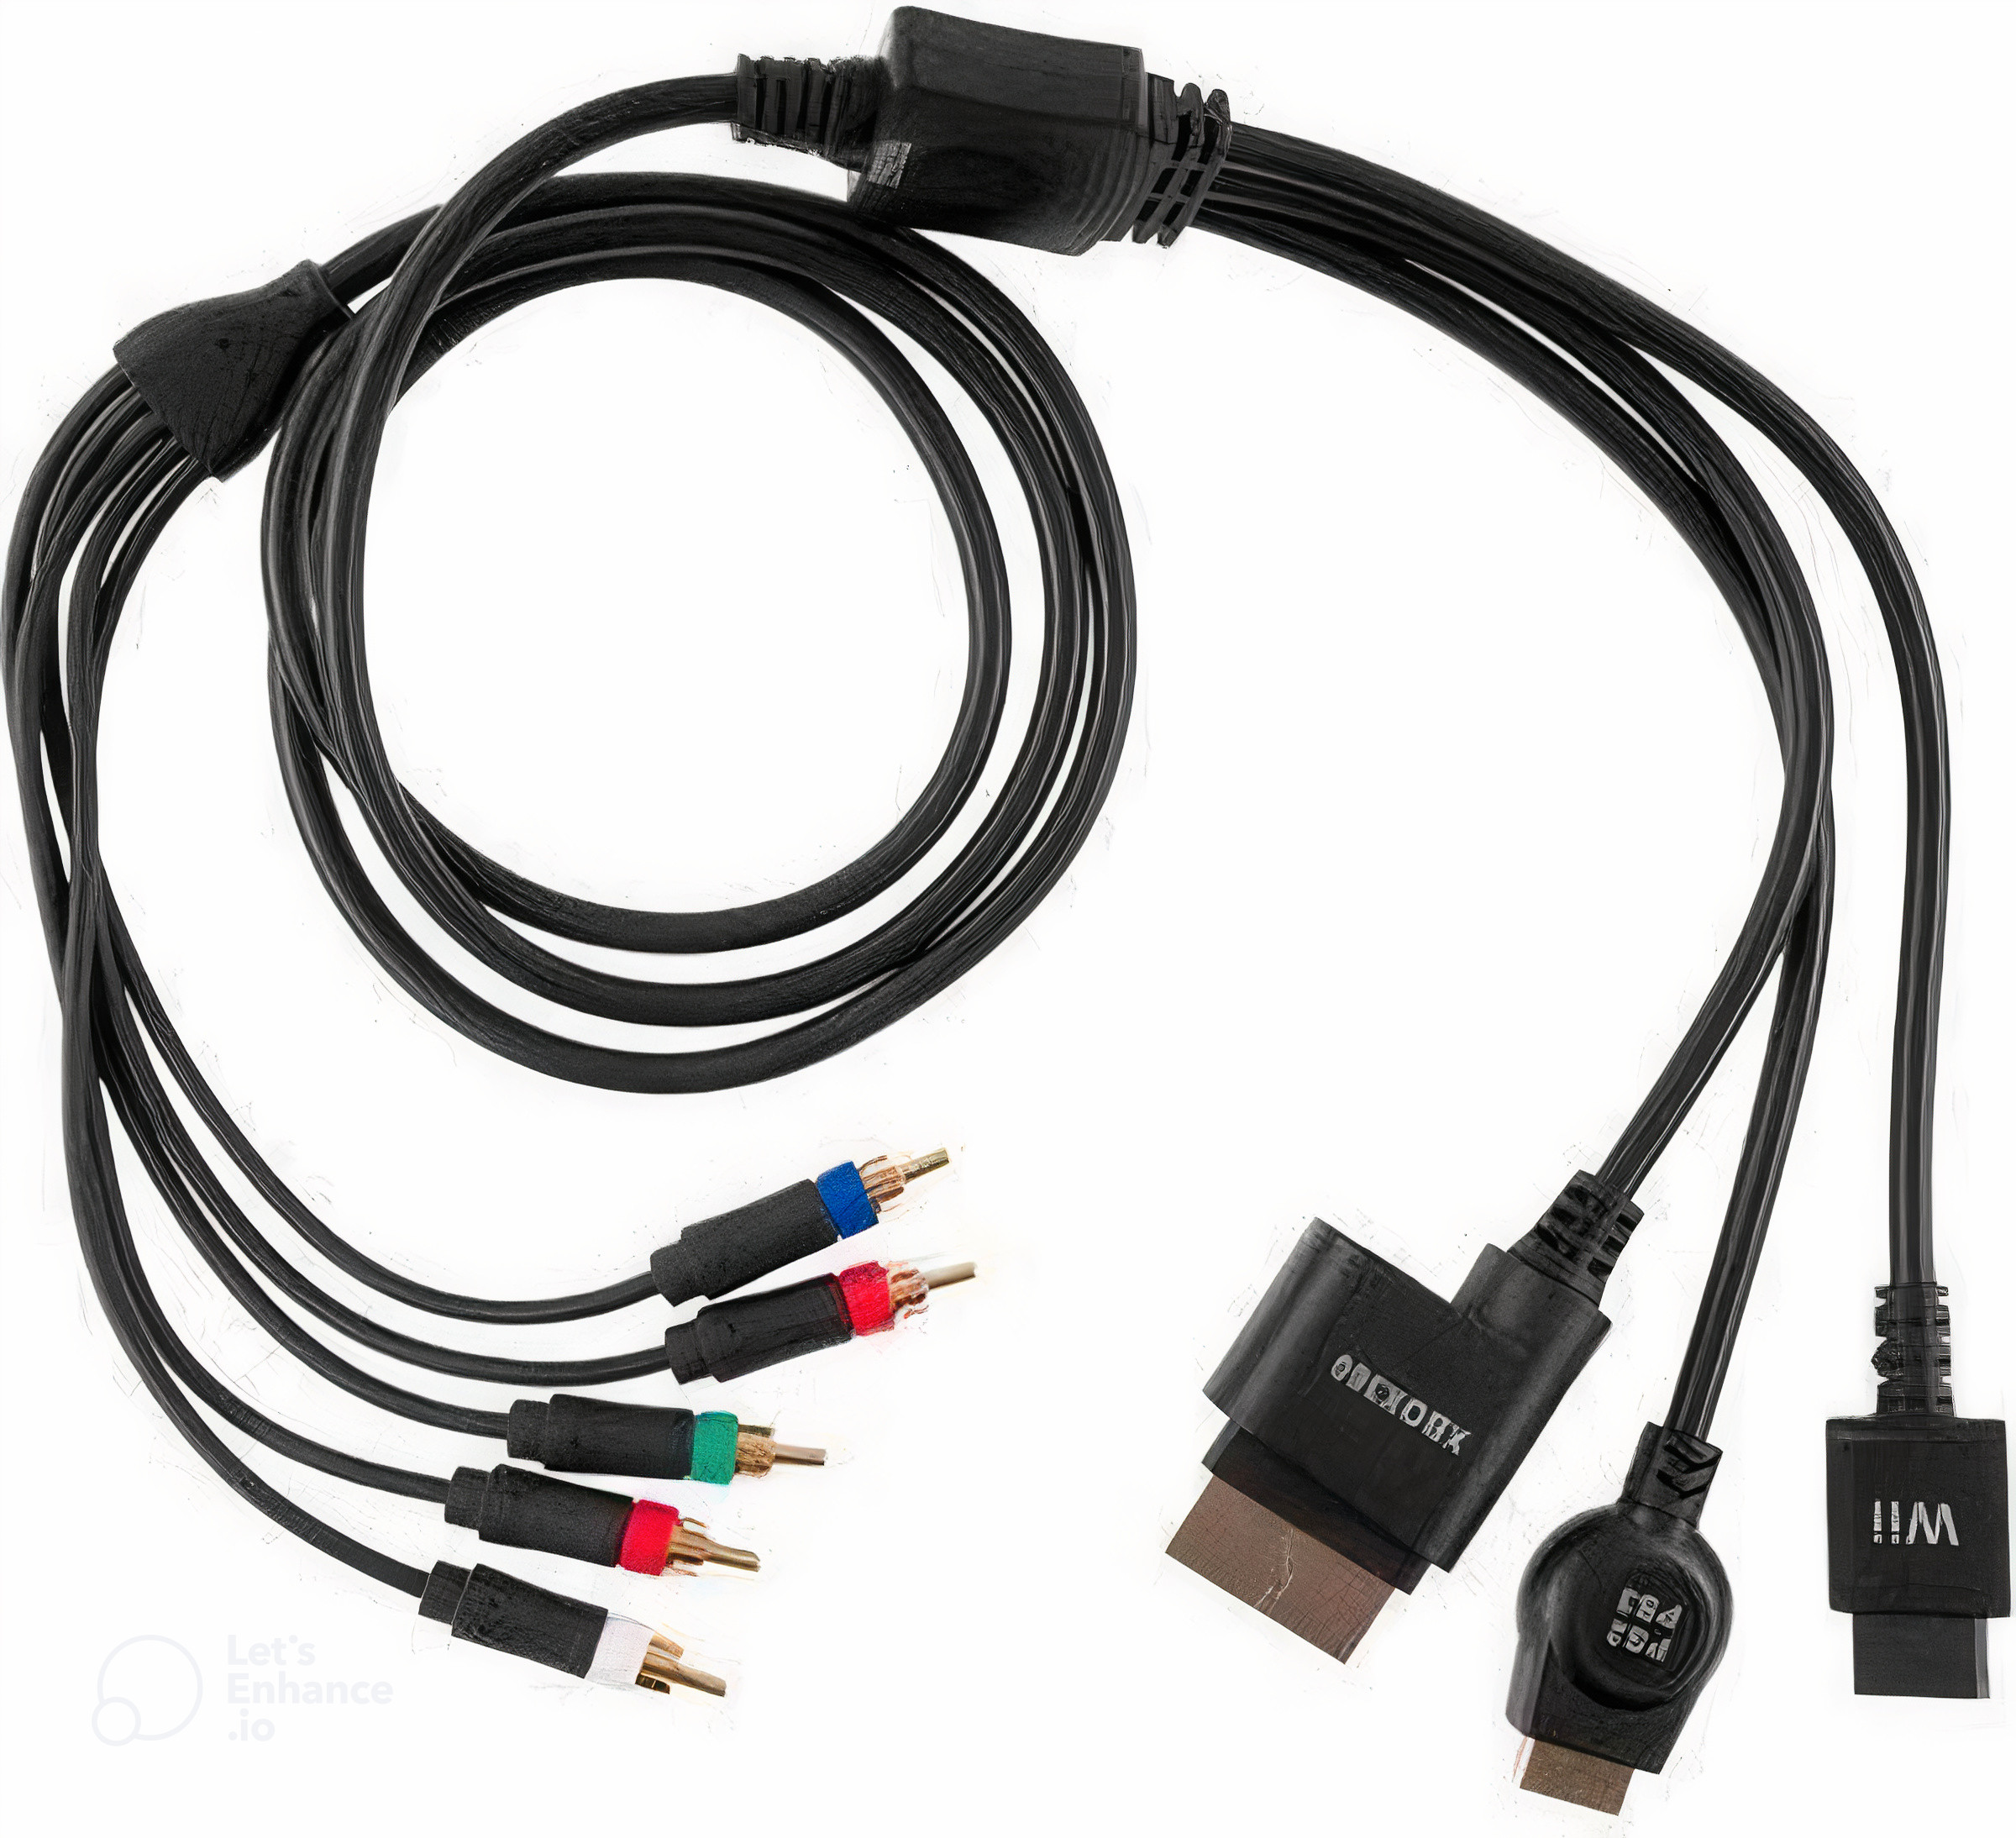 Cablu component pentru  XBOX 360 / PlayStation PS1, PS2, PS3 / Nintendo Wii, Wii U - EAN 3700372704526